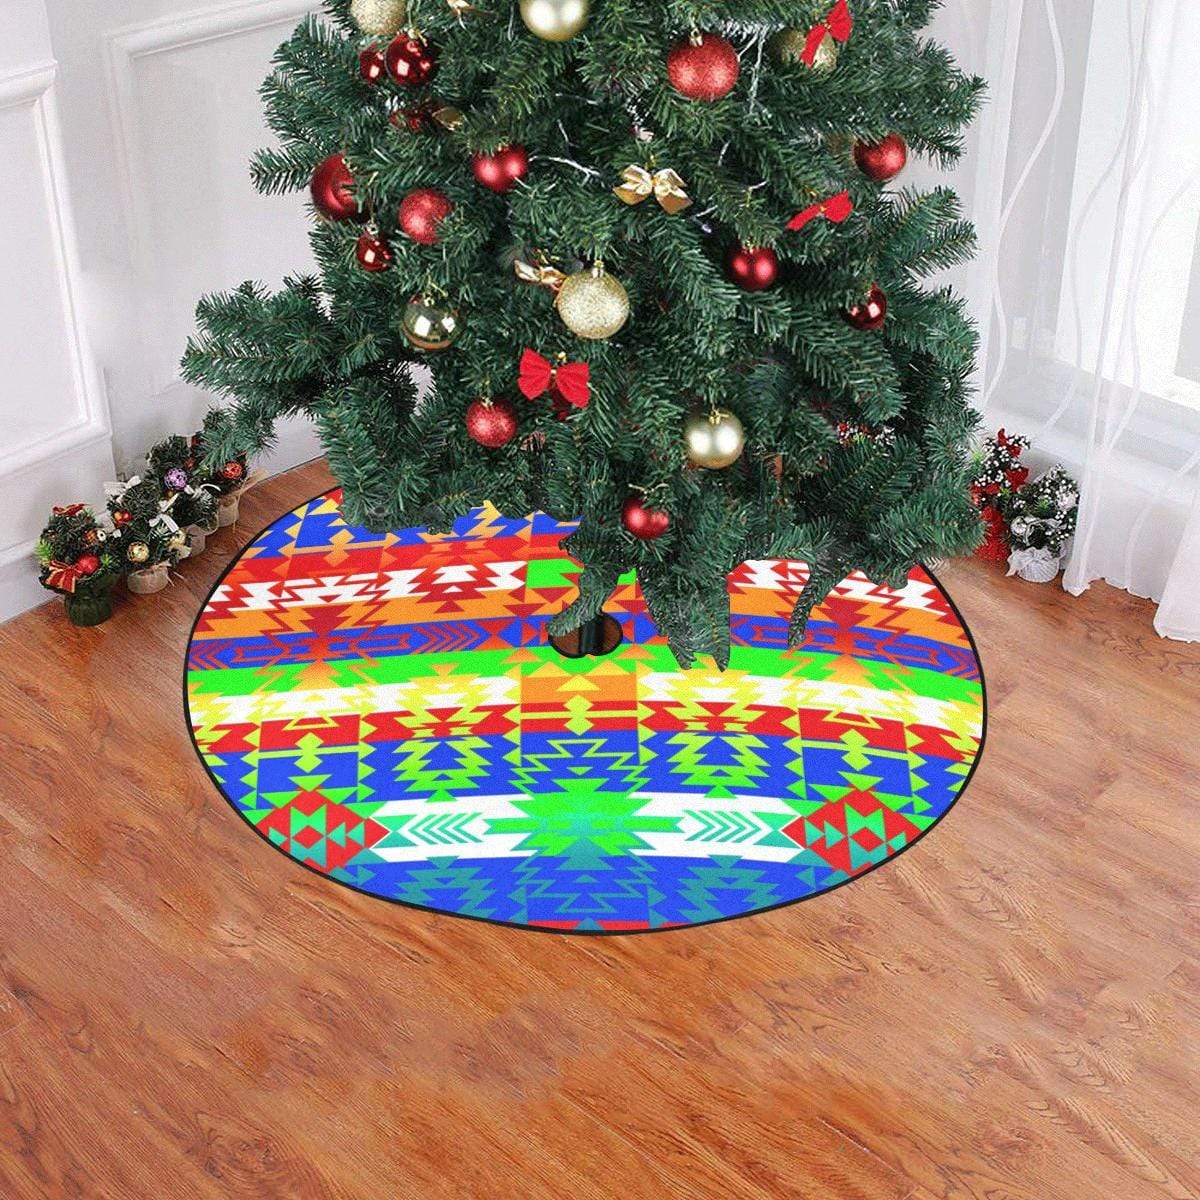 Grand Entry Traditional Christmas Tree Skirt 47" x 47" Christmas Tree Skirt e-joyer 